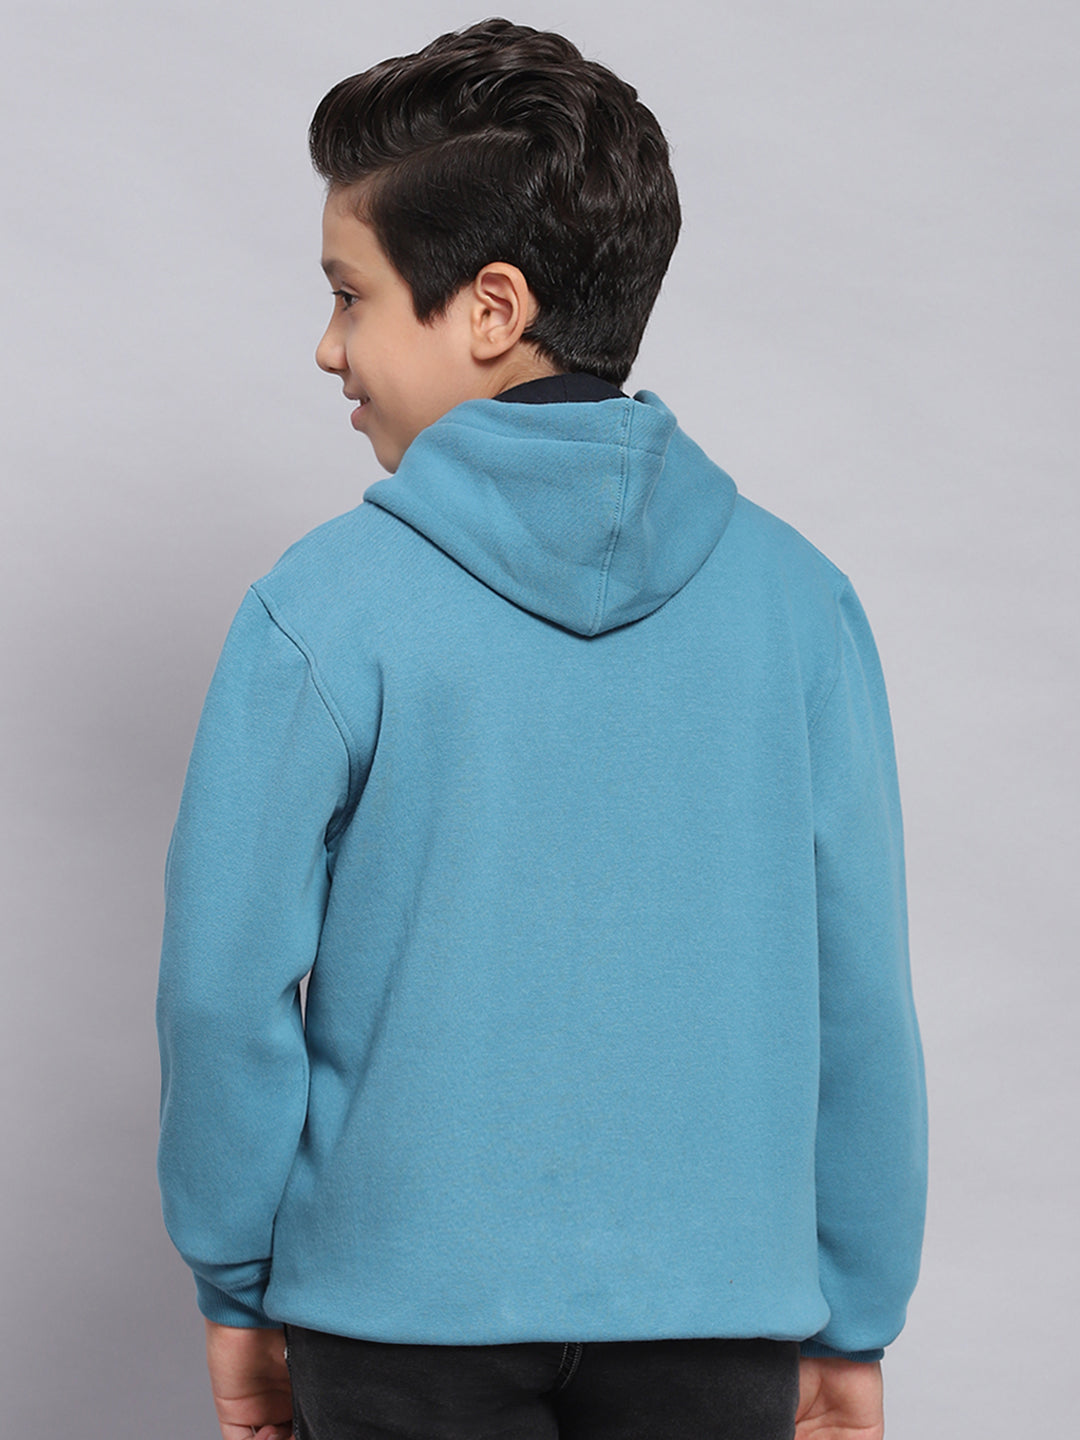 Boys Blue Printed Hooded Full Sleeve Sweatshirt